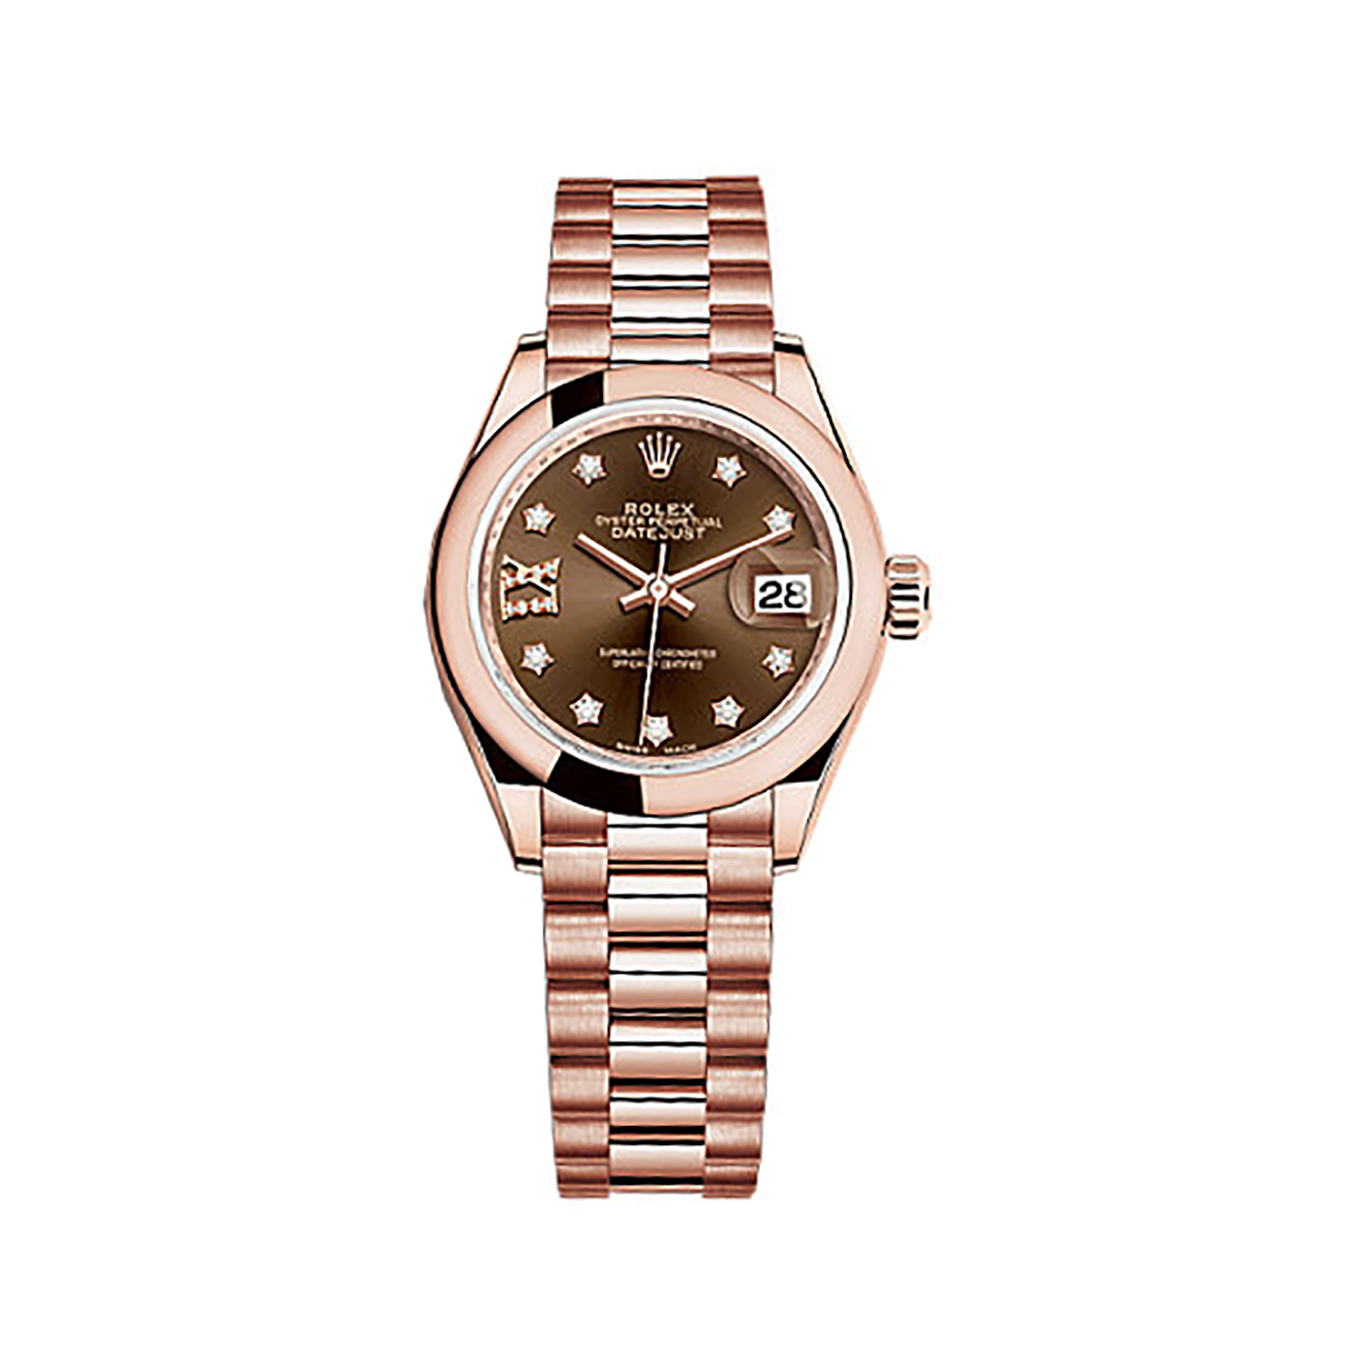 Lady-Datejust 28 279165 Rose Gold Watch (Chocolate Set with Diamonds)